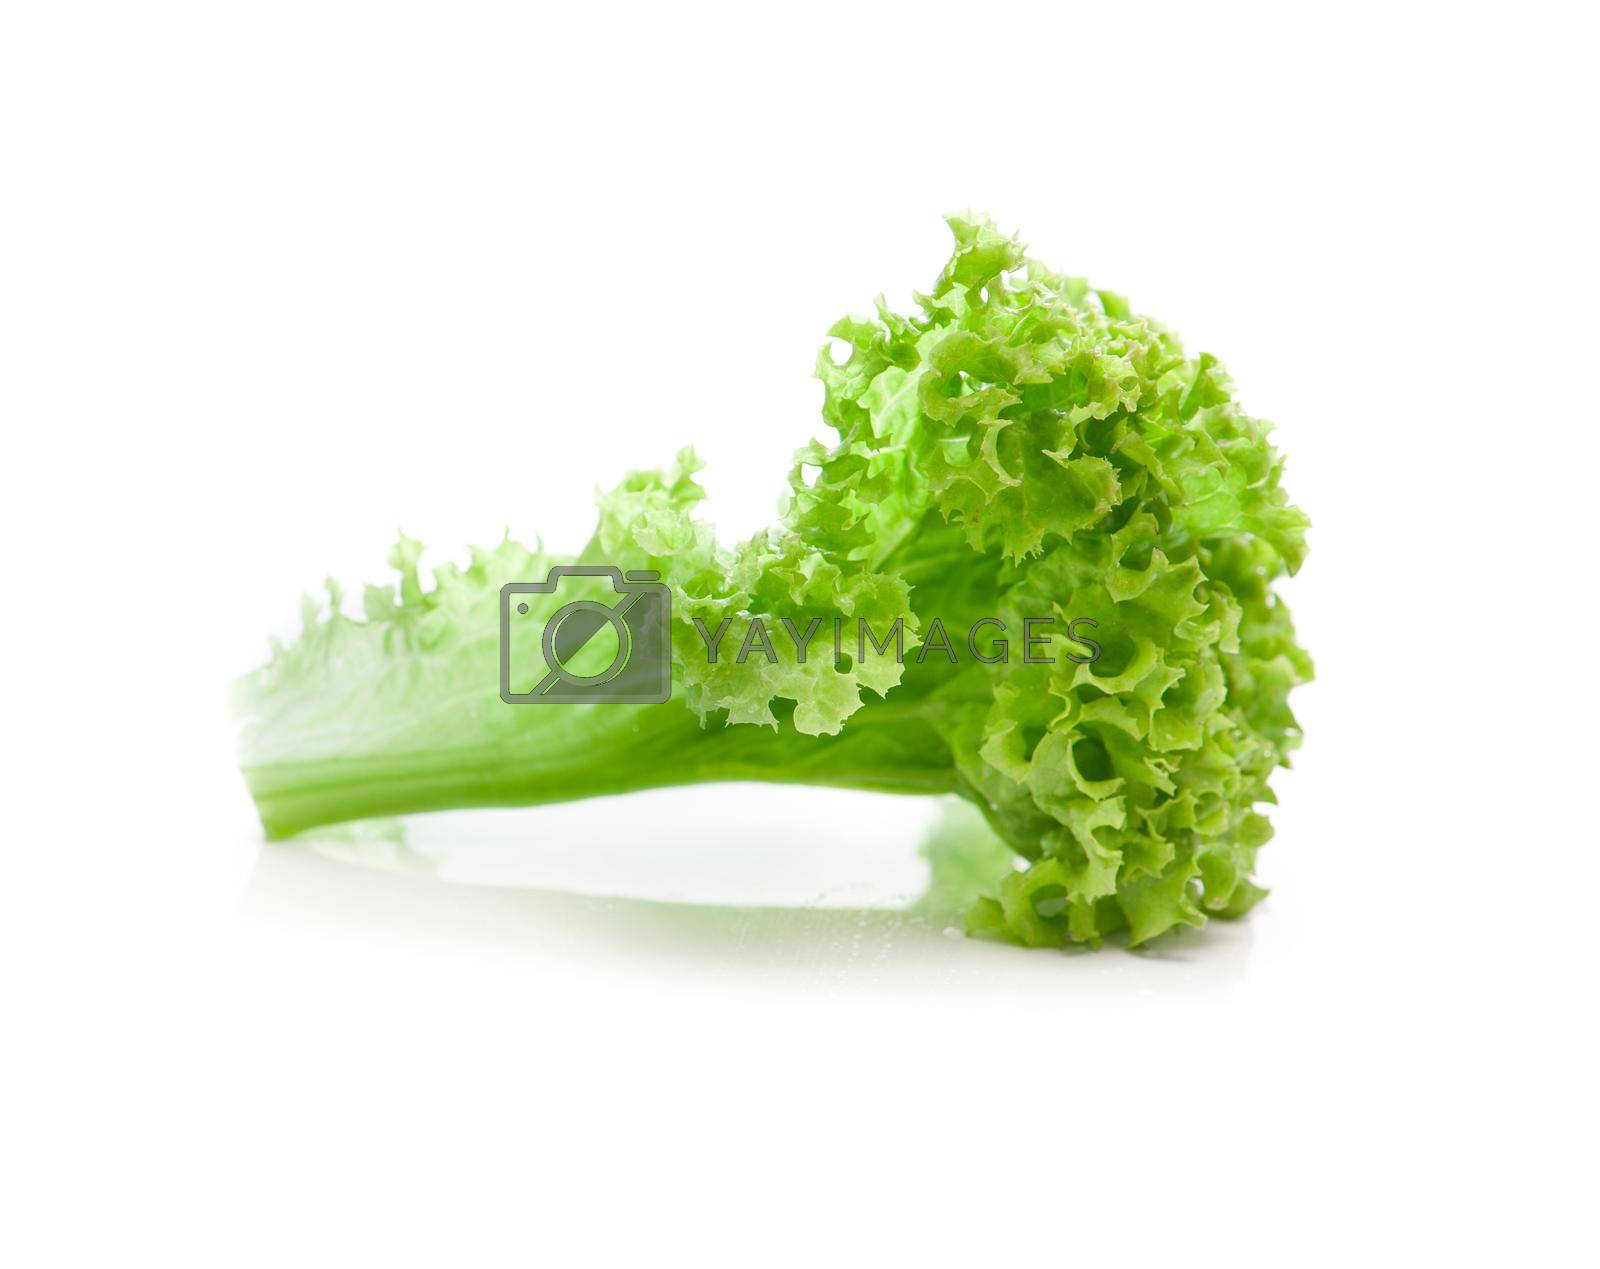 Royalty free image of green leaves lettuce by tan4ikk1